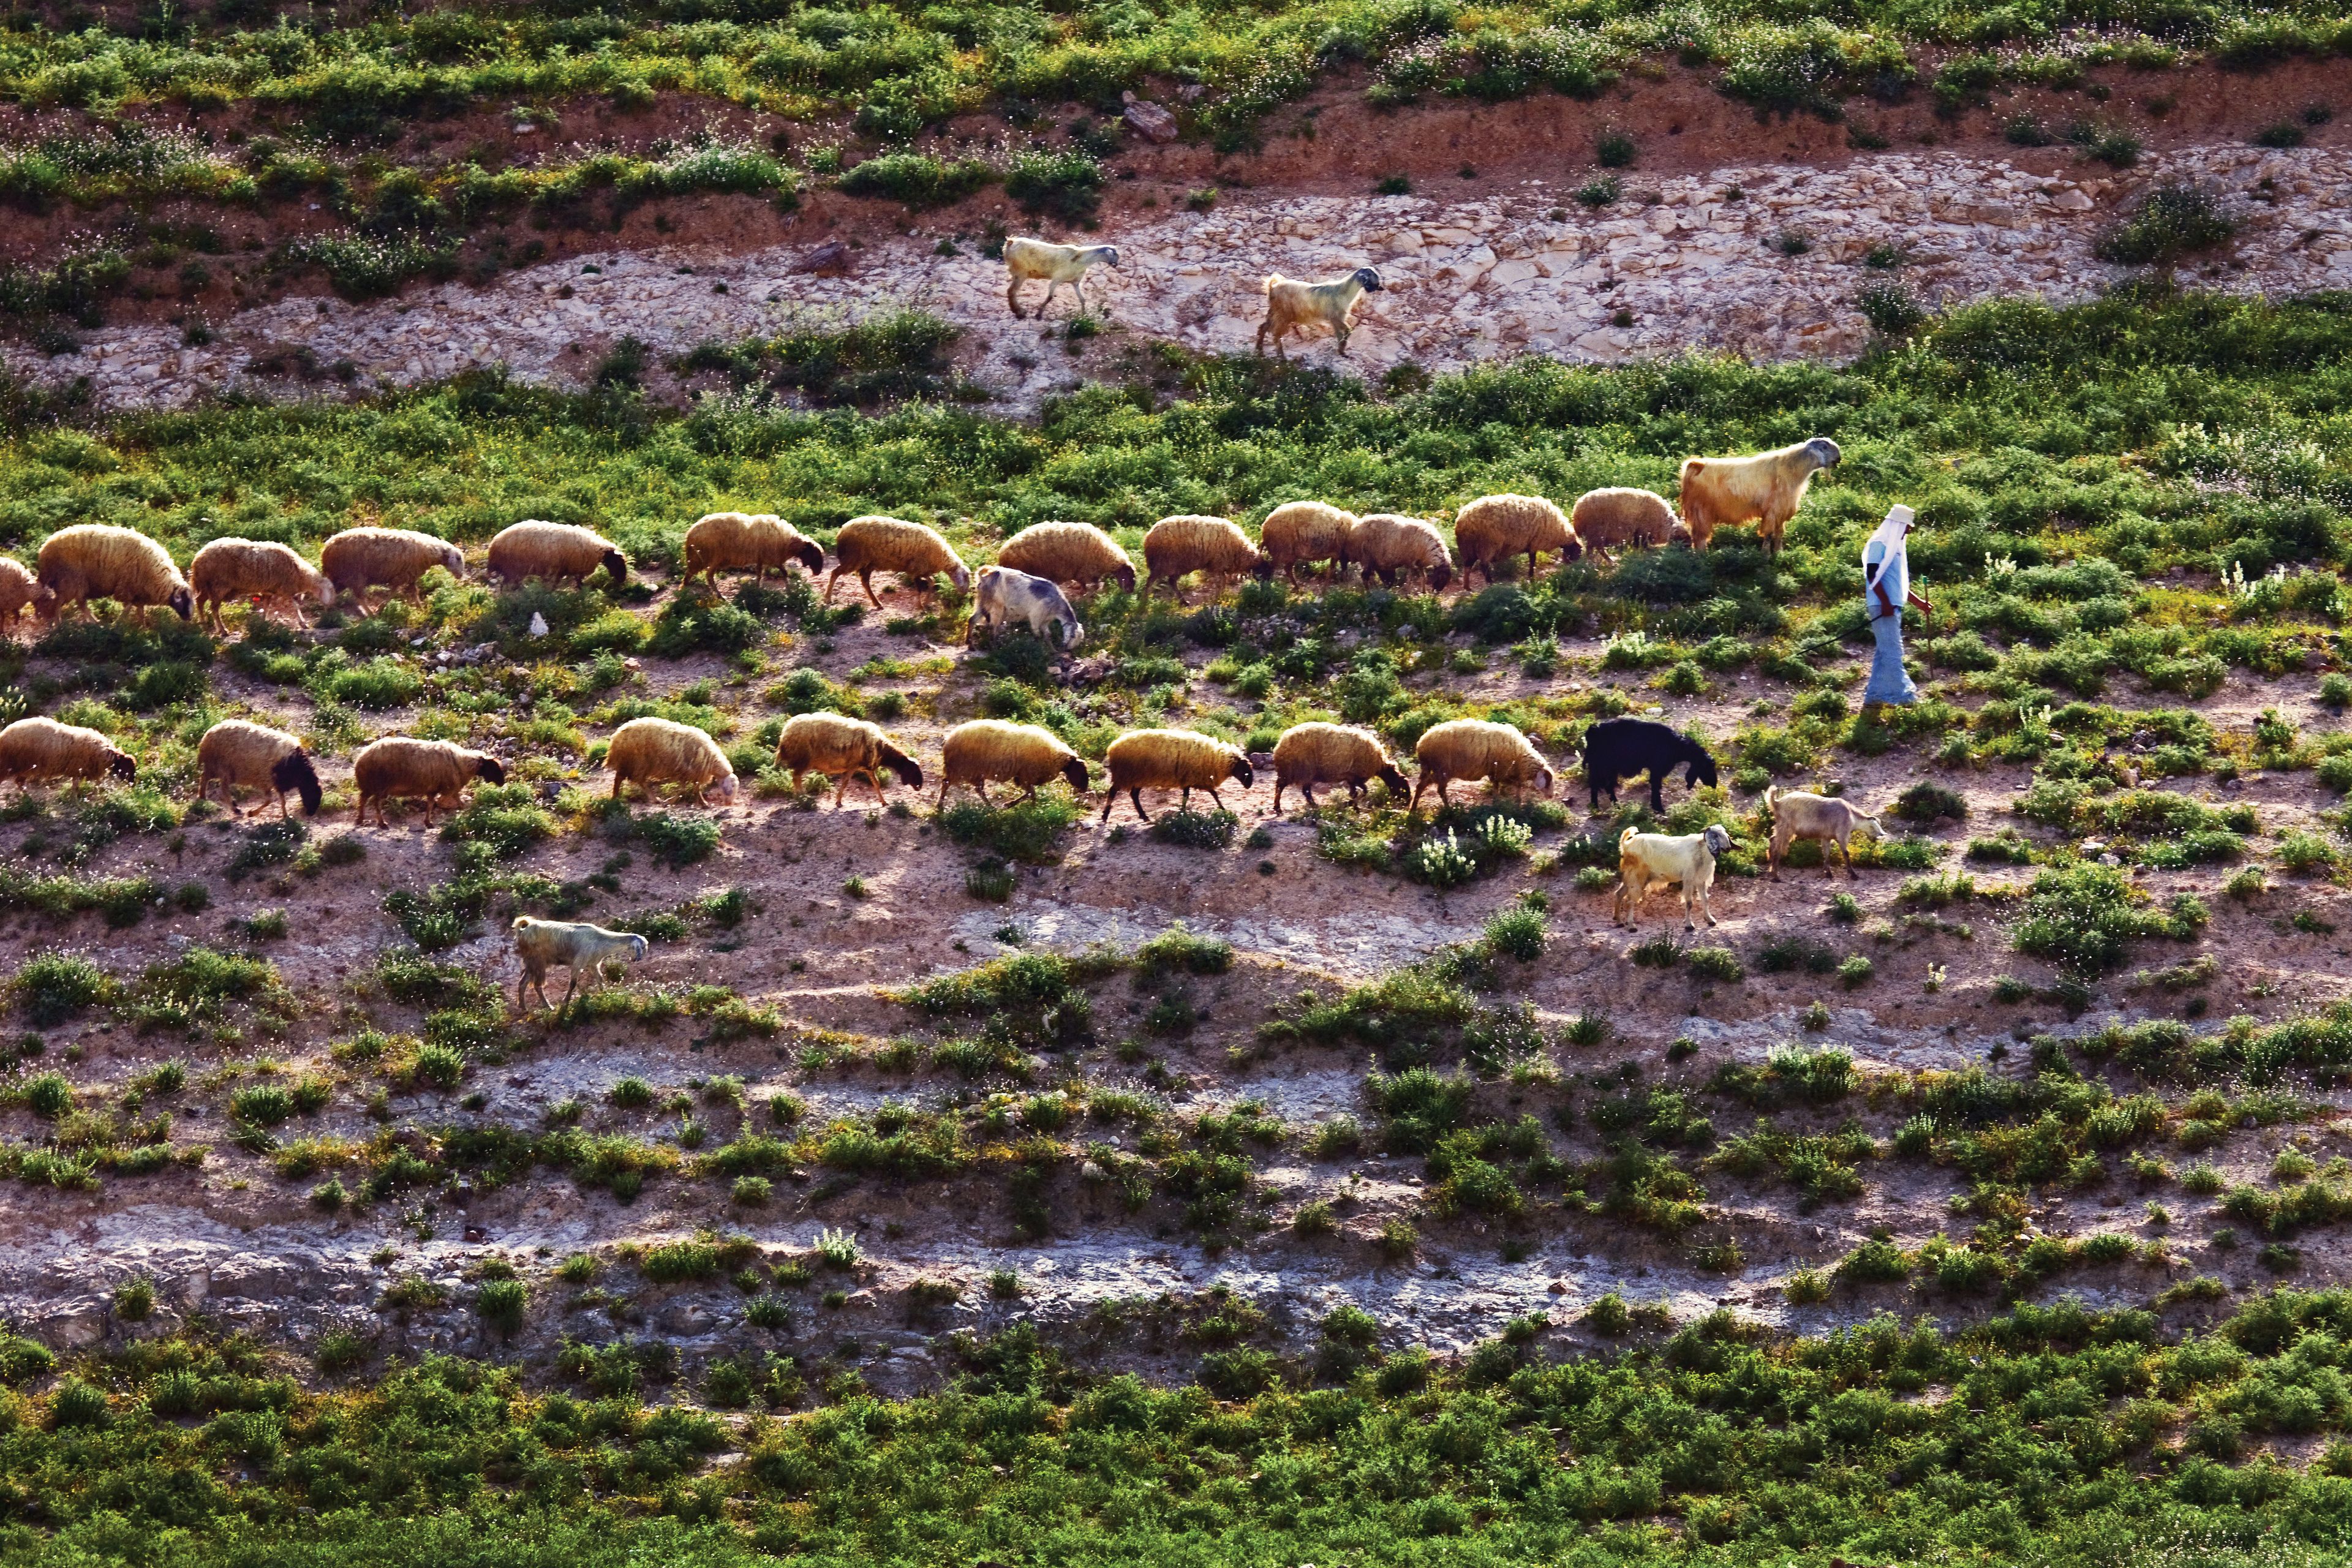 A shepherd leading his sheep.